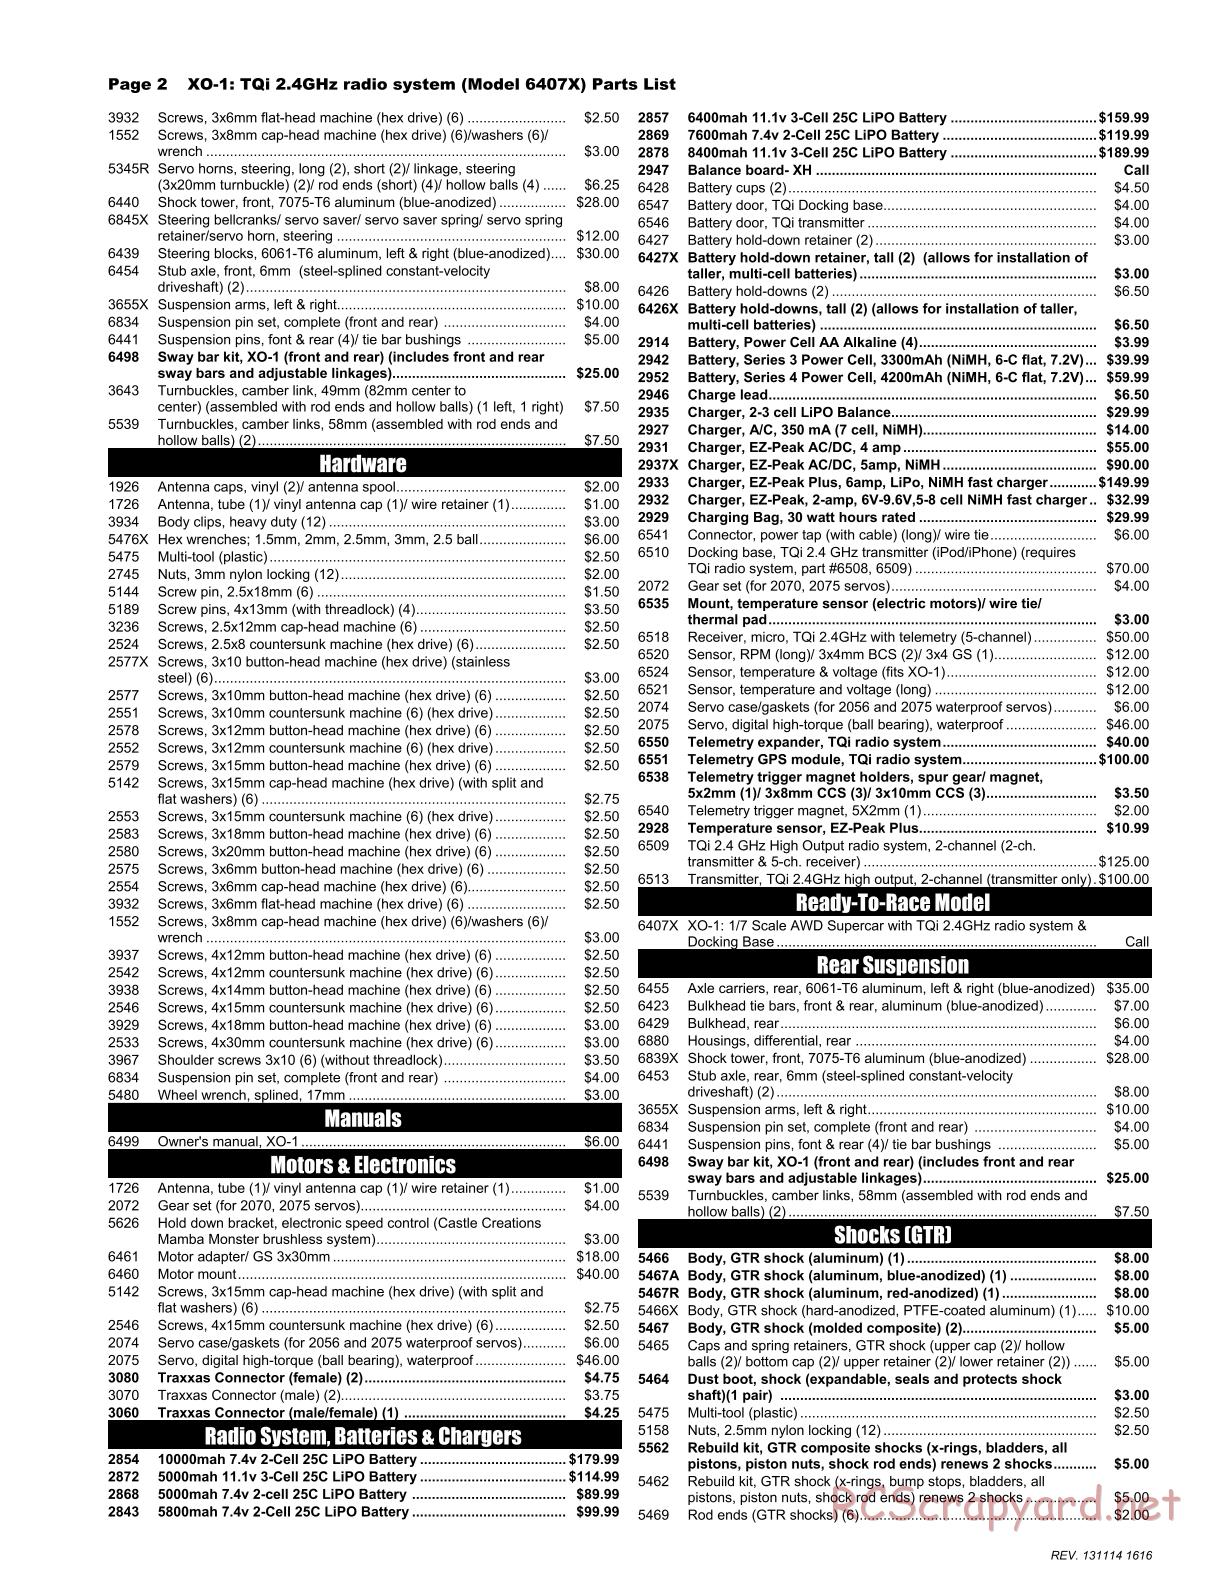 Traxxas - XO-1 (2014) - Parts List - Page 2